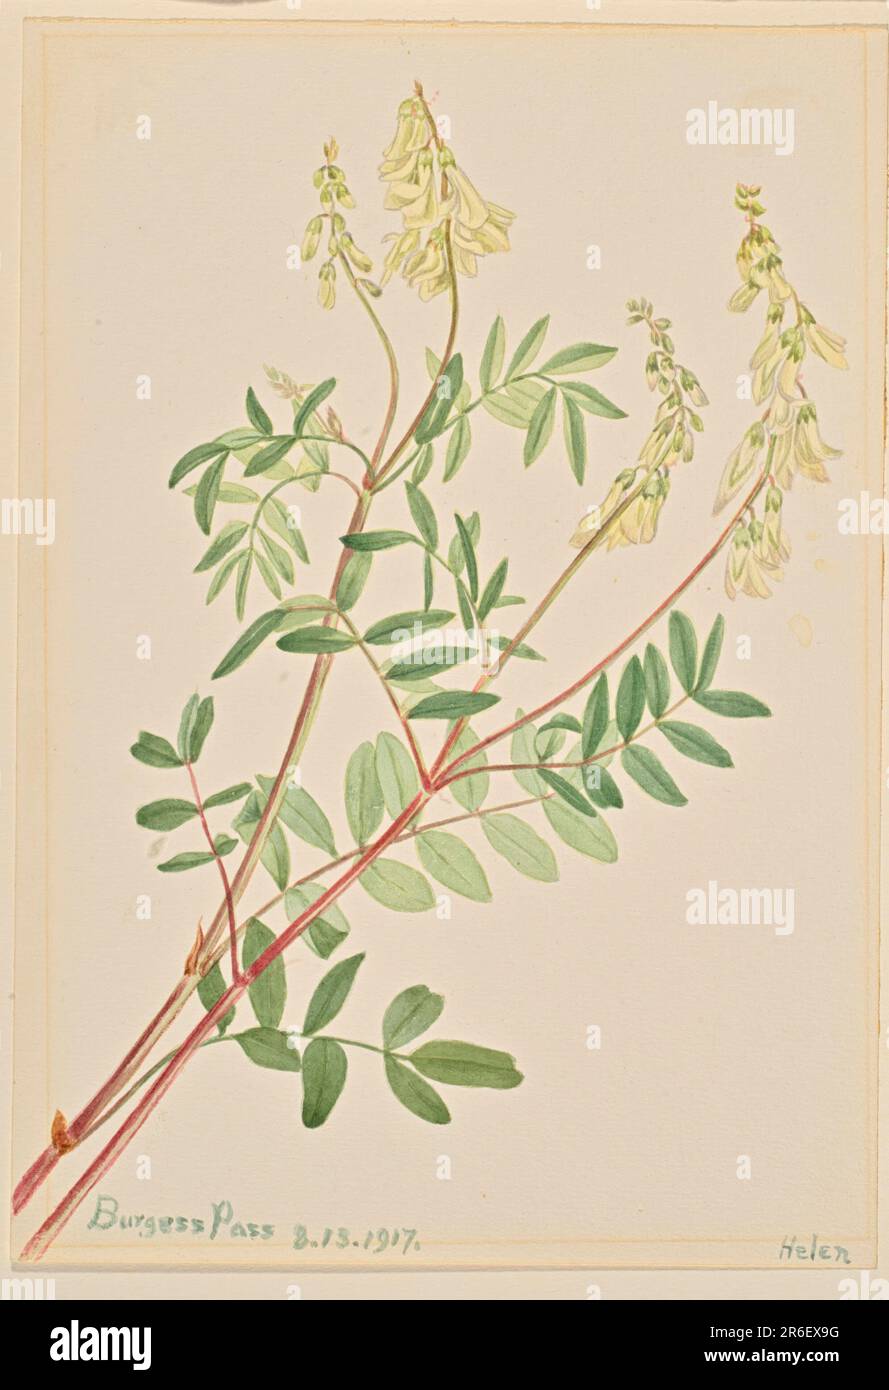 Hedysarum (Hedysarum sulphurescens). Date: 1917. Watercolor on paper. Museum: Smithsonian American Art Museum. Stock Photo